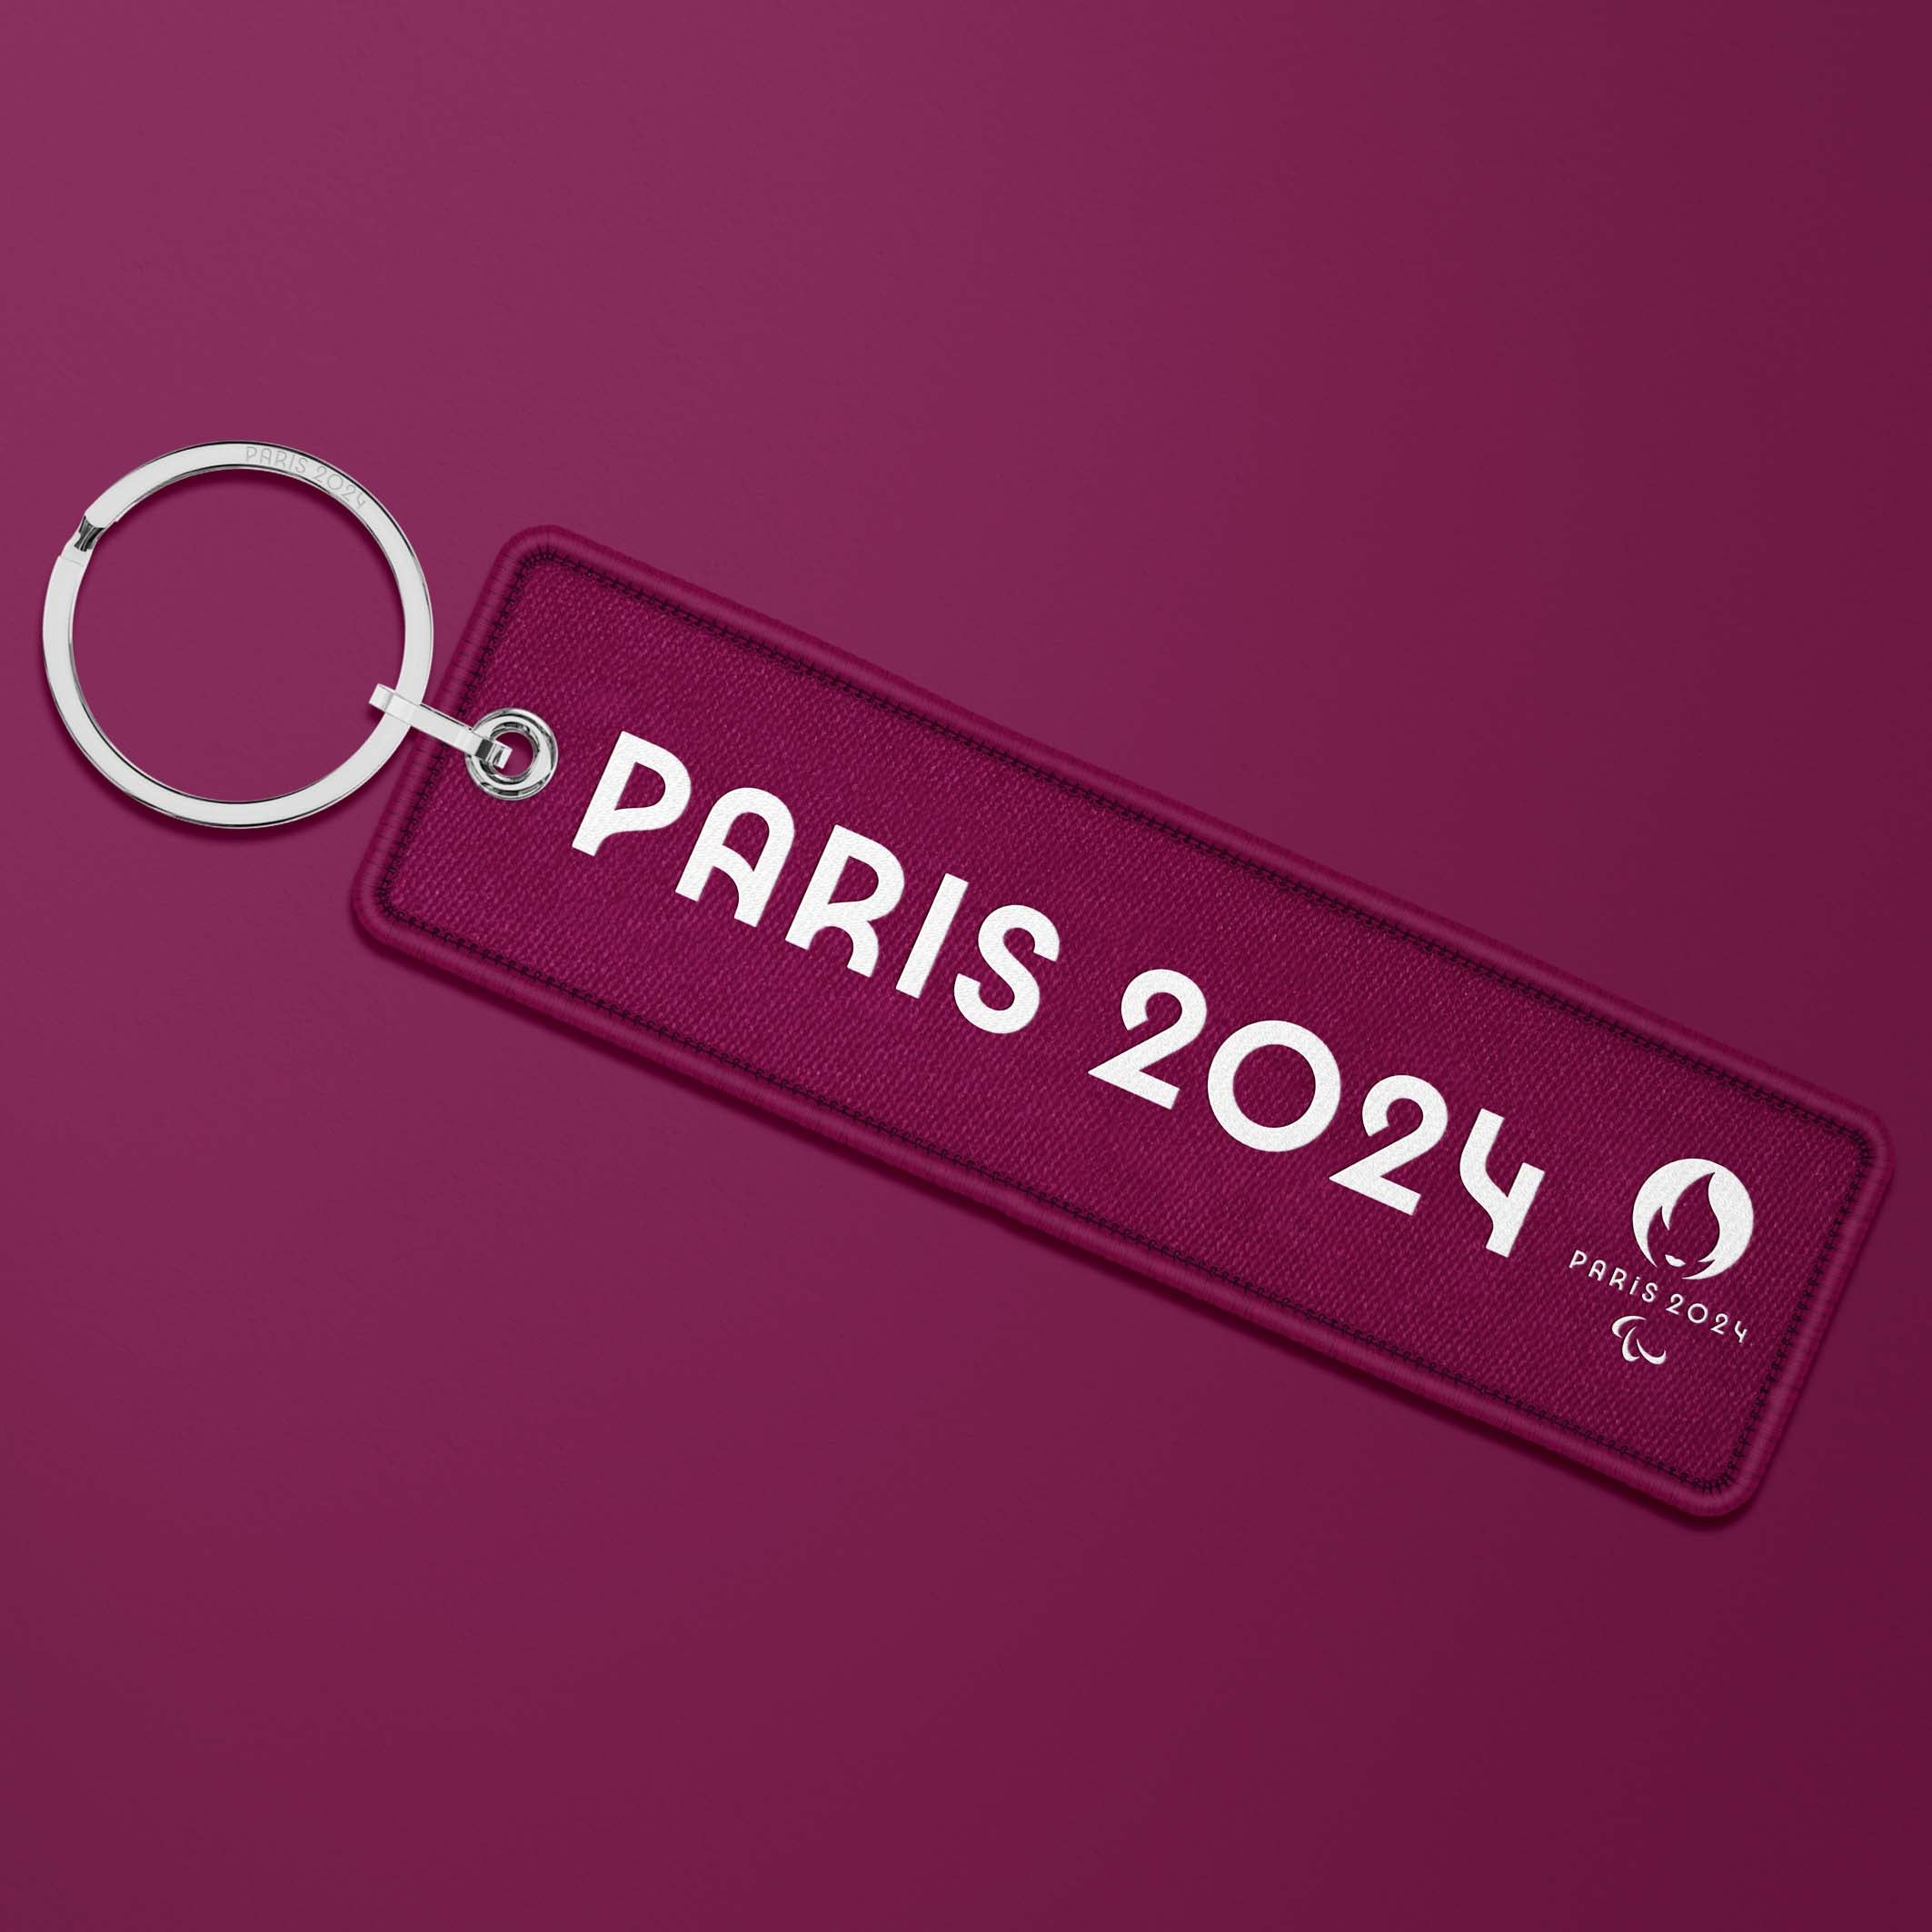 Paris 2024 Burgundy flame key ring - Wheelchair tennis